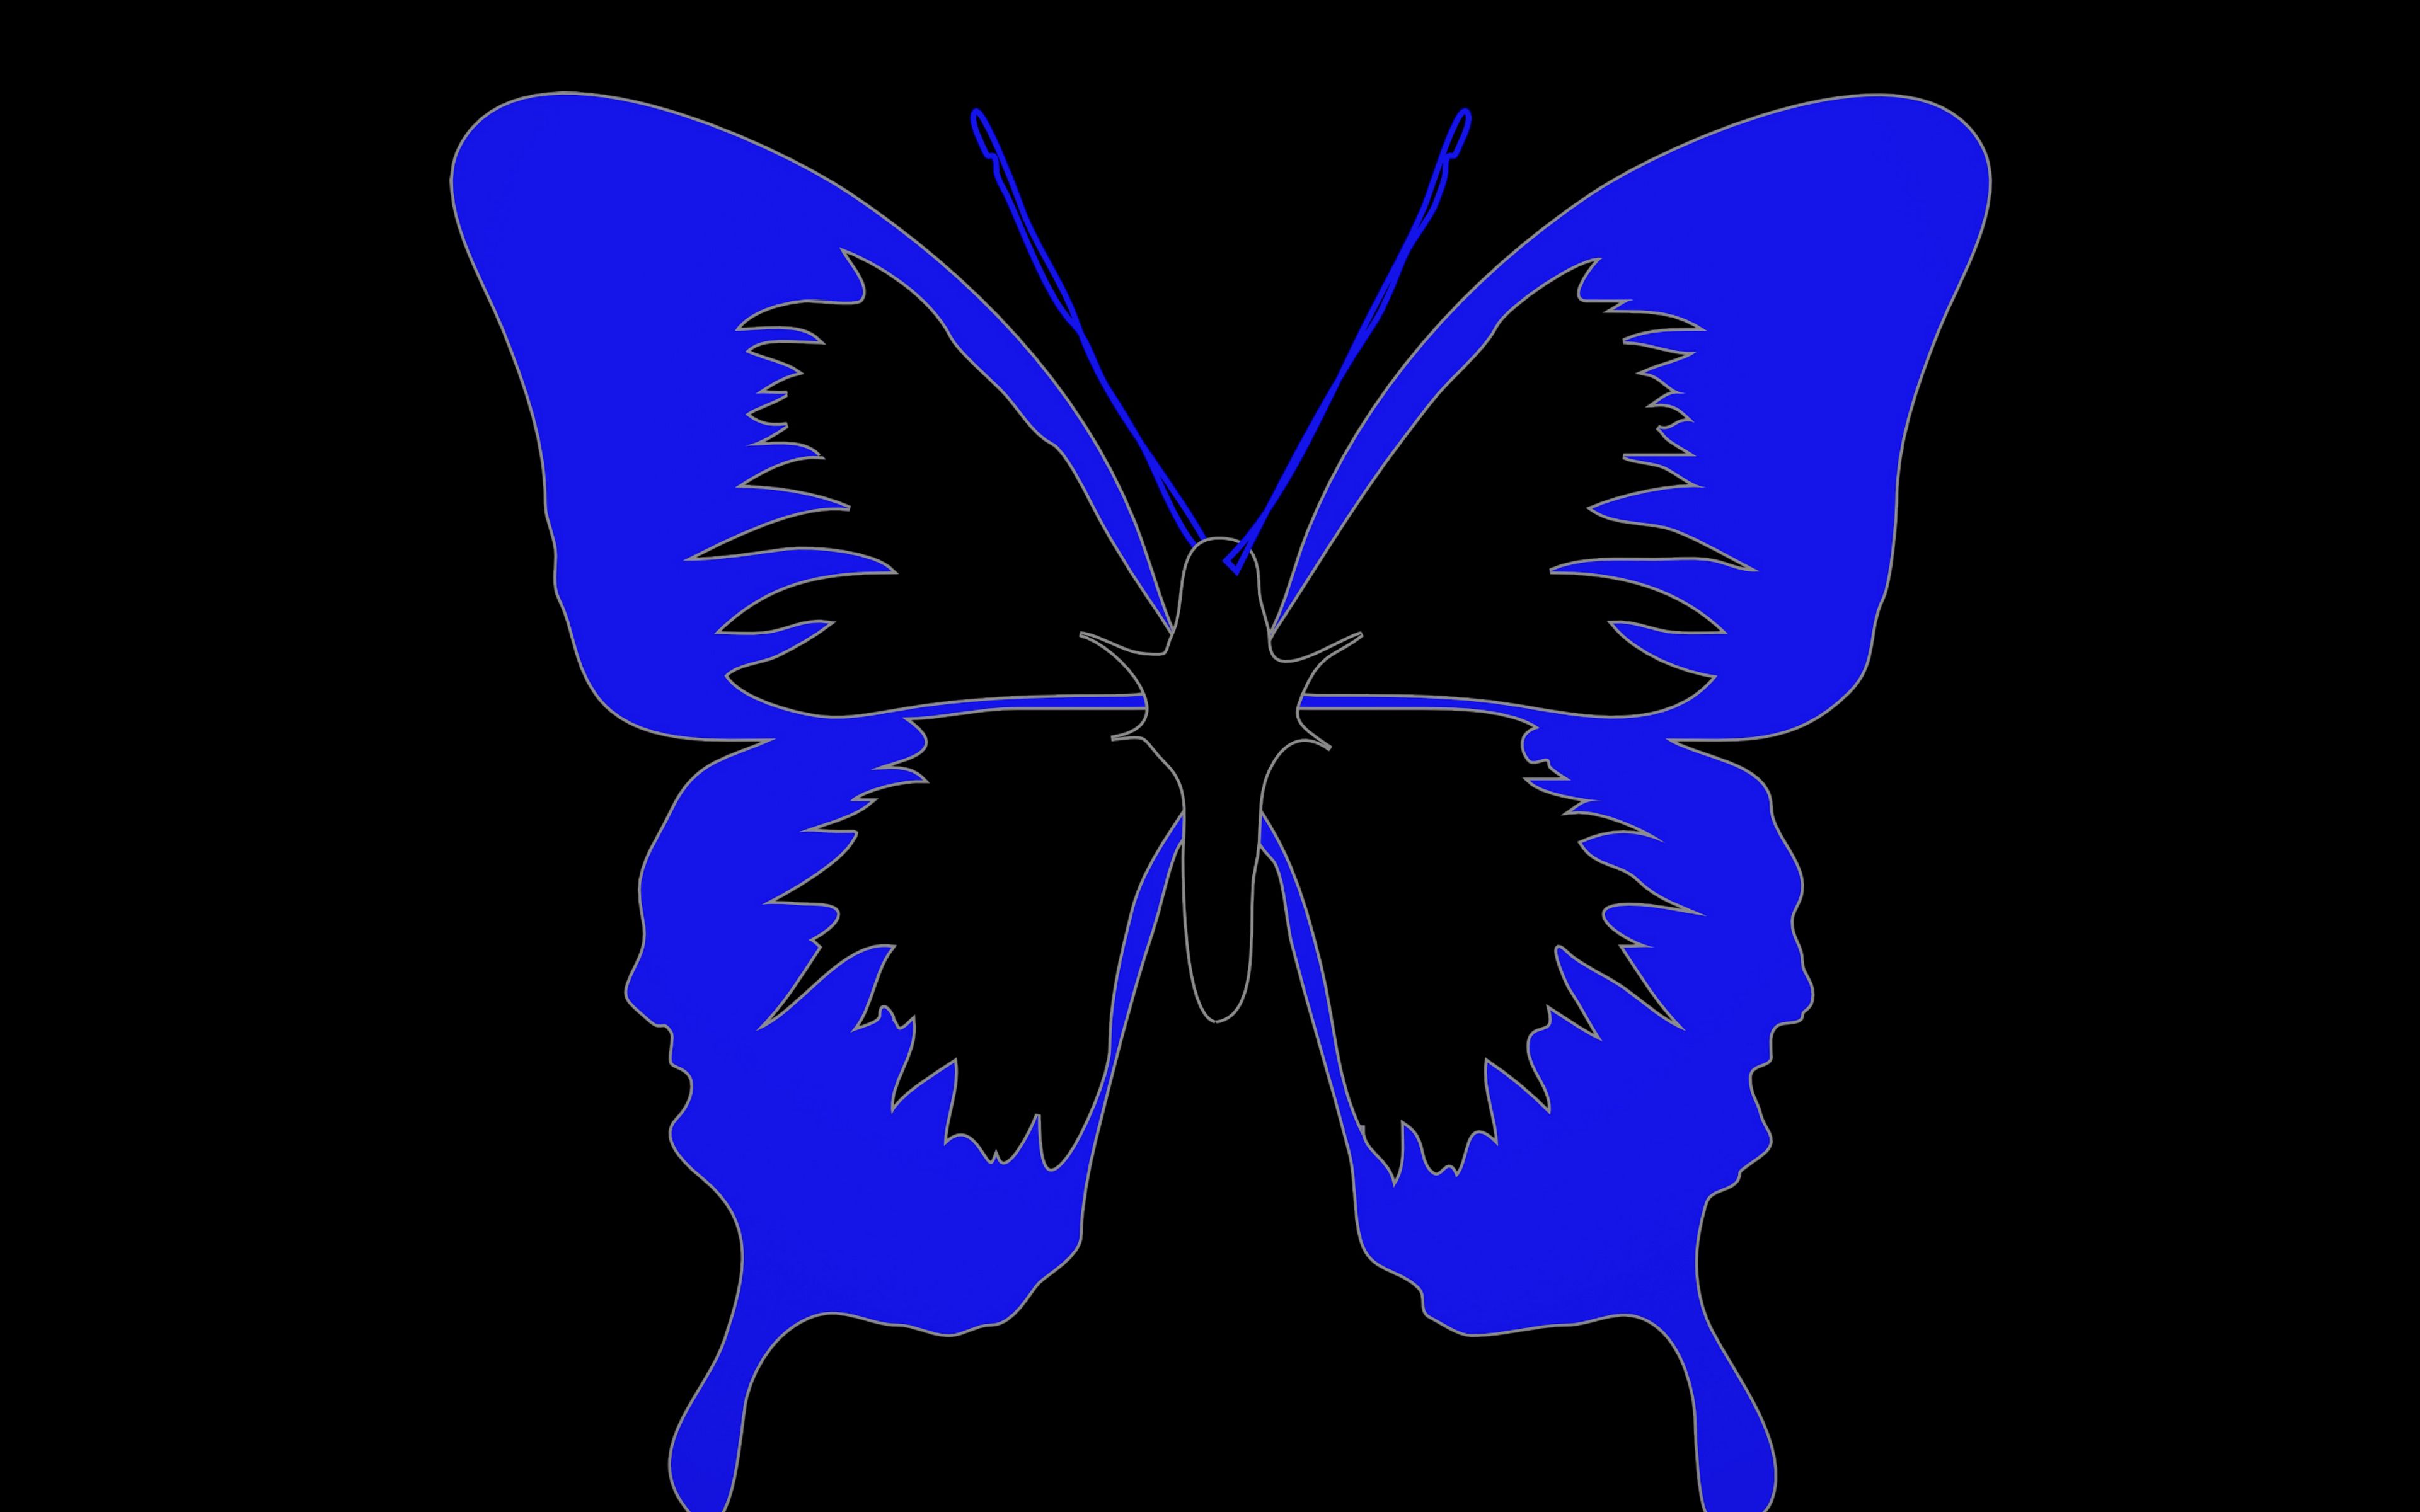 Download wallpaper 3840x2400 butterfly, minimalism, black, blue 4k ultra hd  16:10 hd background